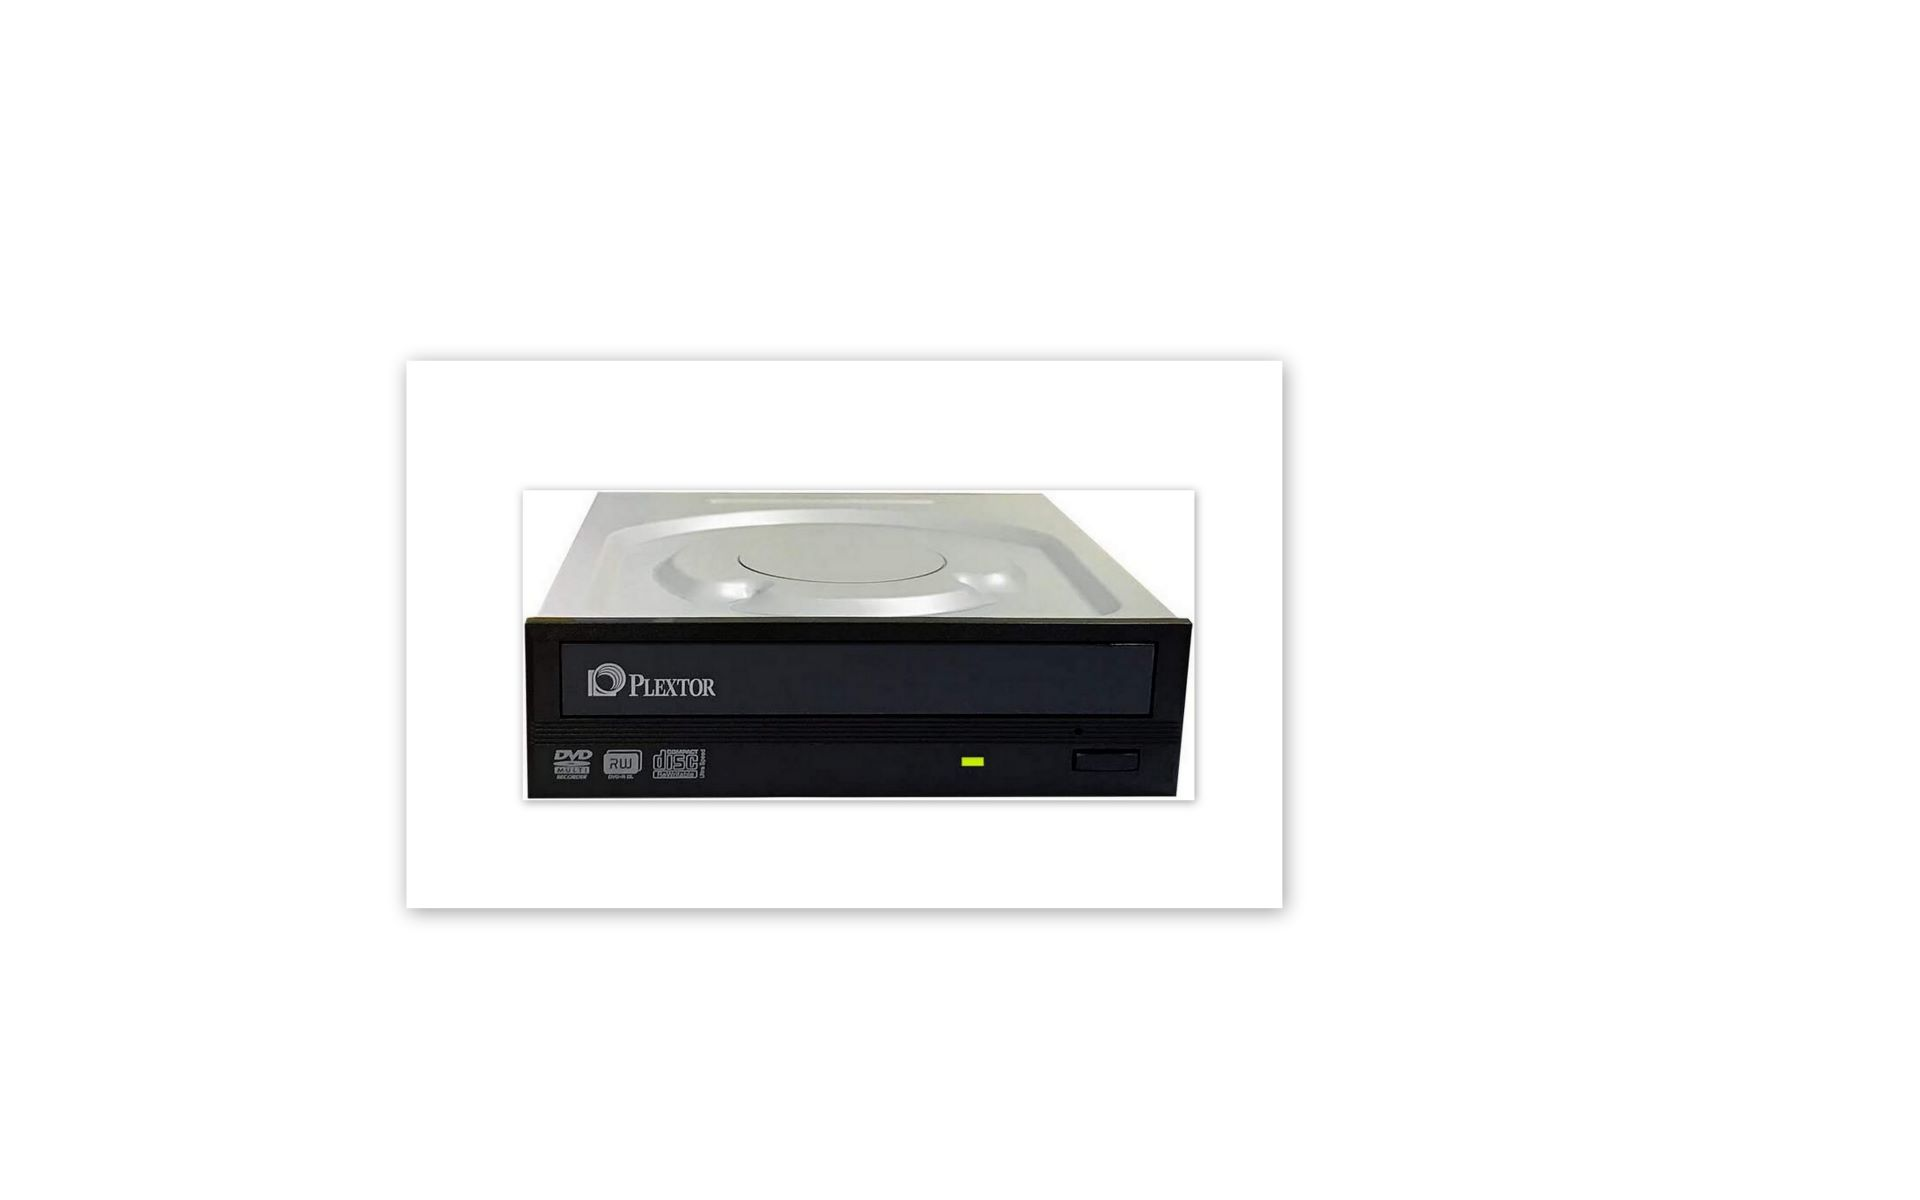 PIODATA DVD Plextor PX-891SAF intern Brenner